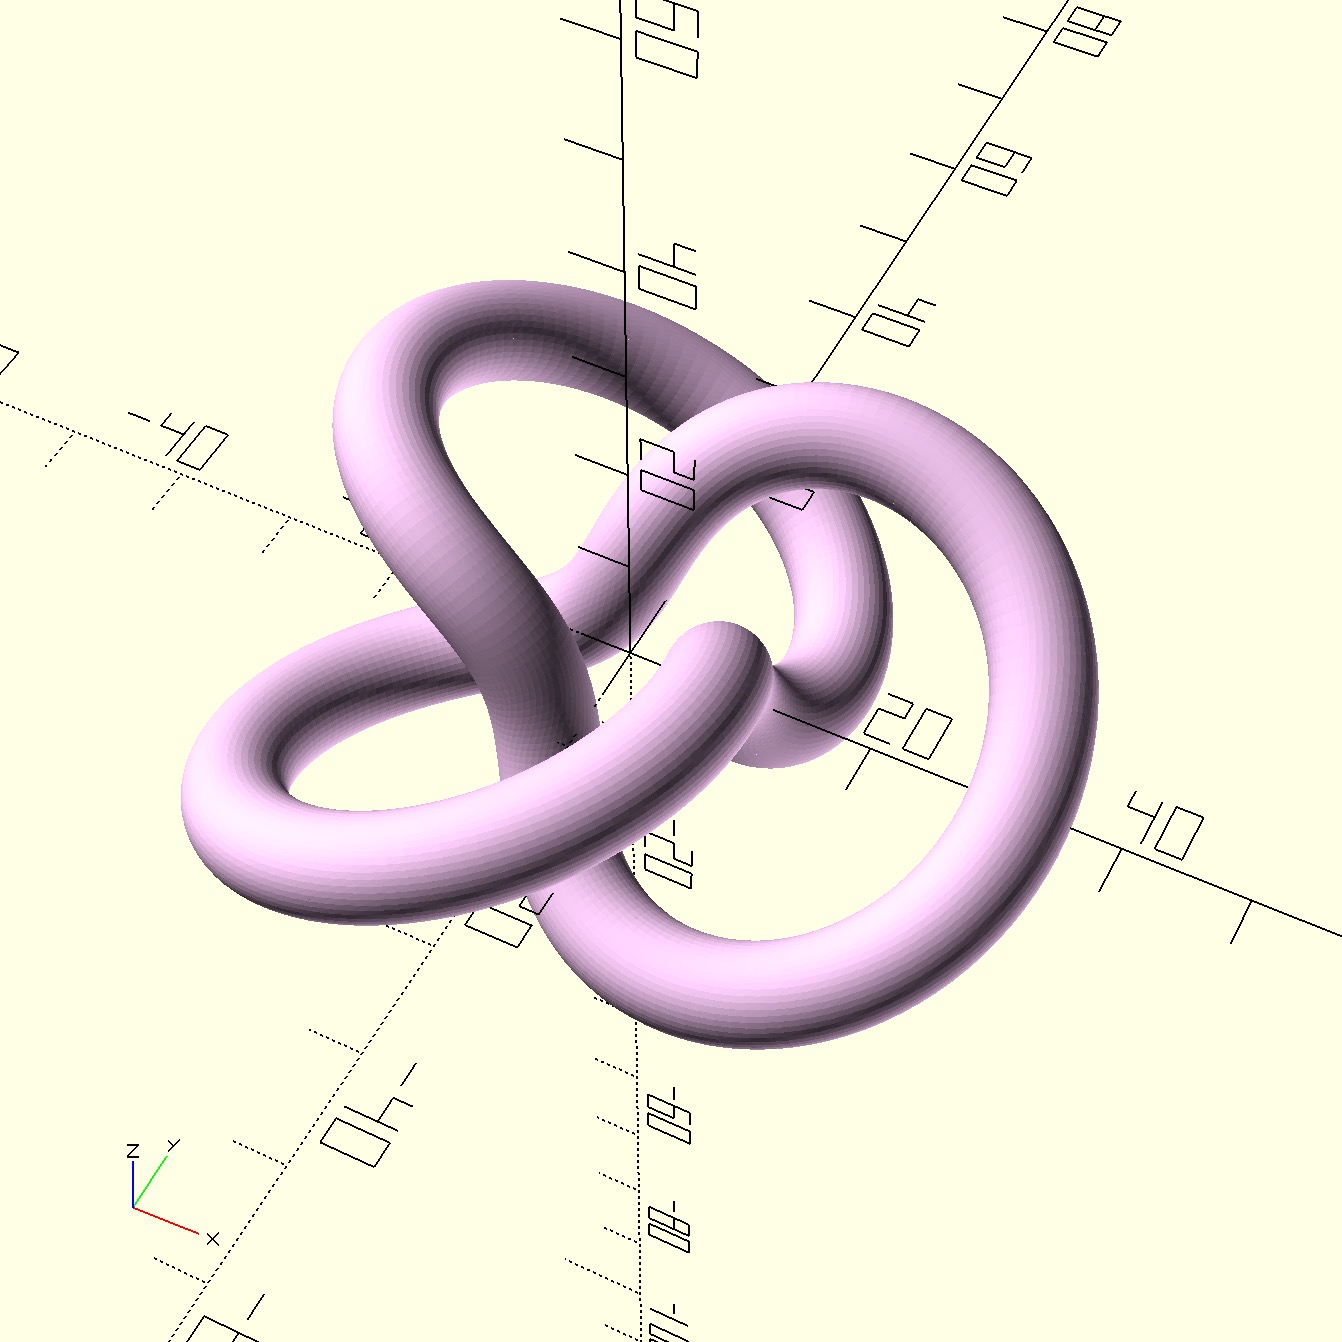 other torus knot geometry